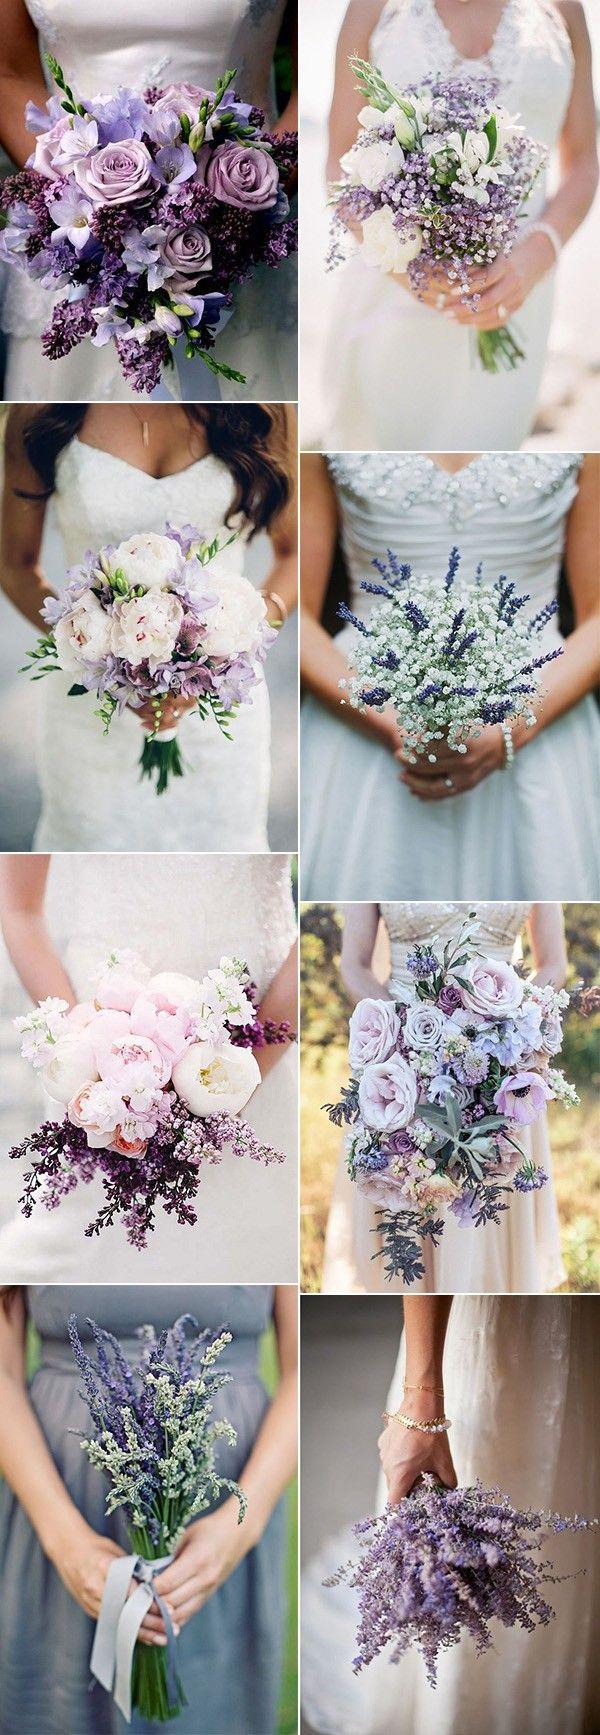 زفاف - Top 28 Stunning Lavender Wedding Ideas To Inspire Your Big Day